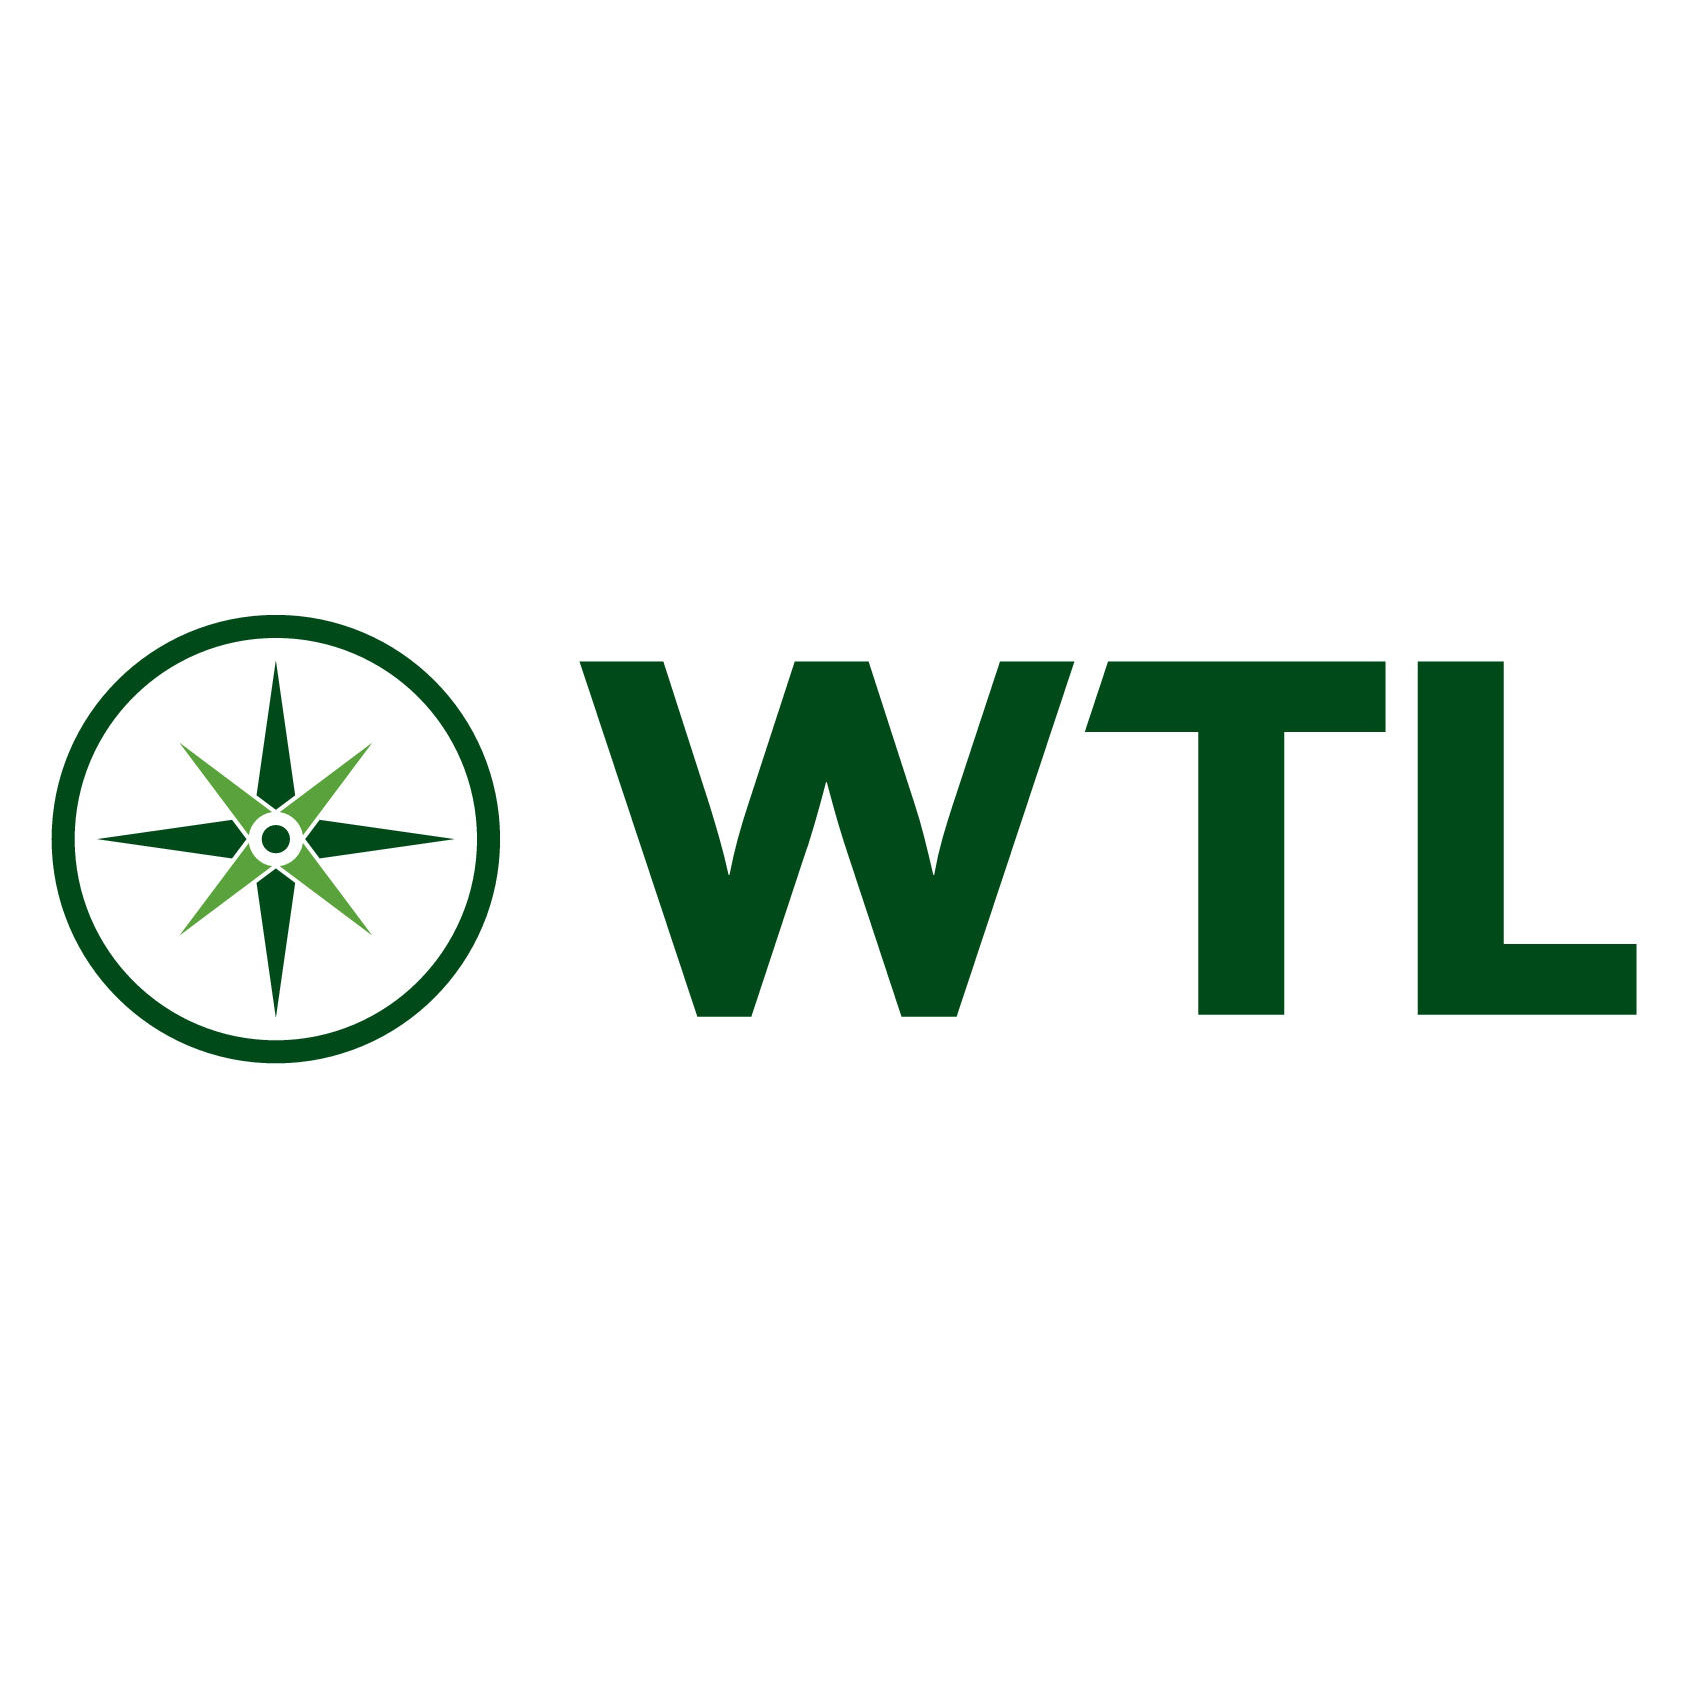 WTL Steuer- und Unternehmensberatung GmbH - Tax Preparation - Linz - 0732 774604 Austria | ShowMeLocal.com